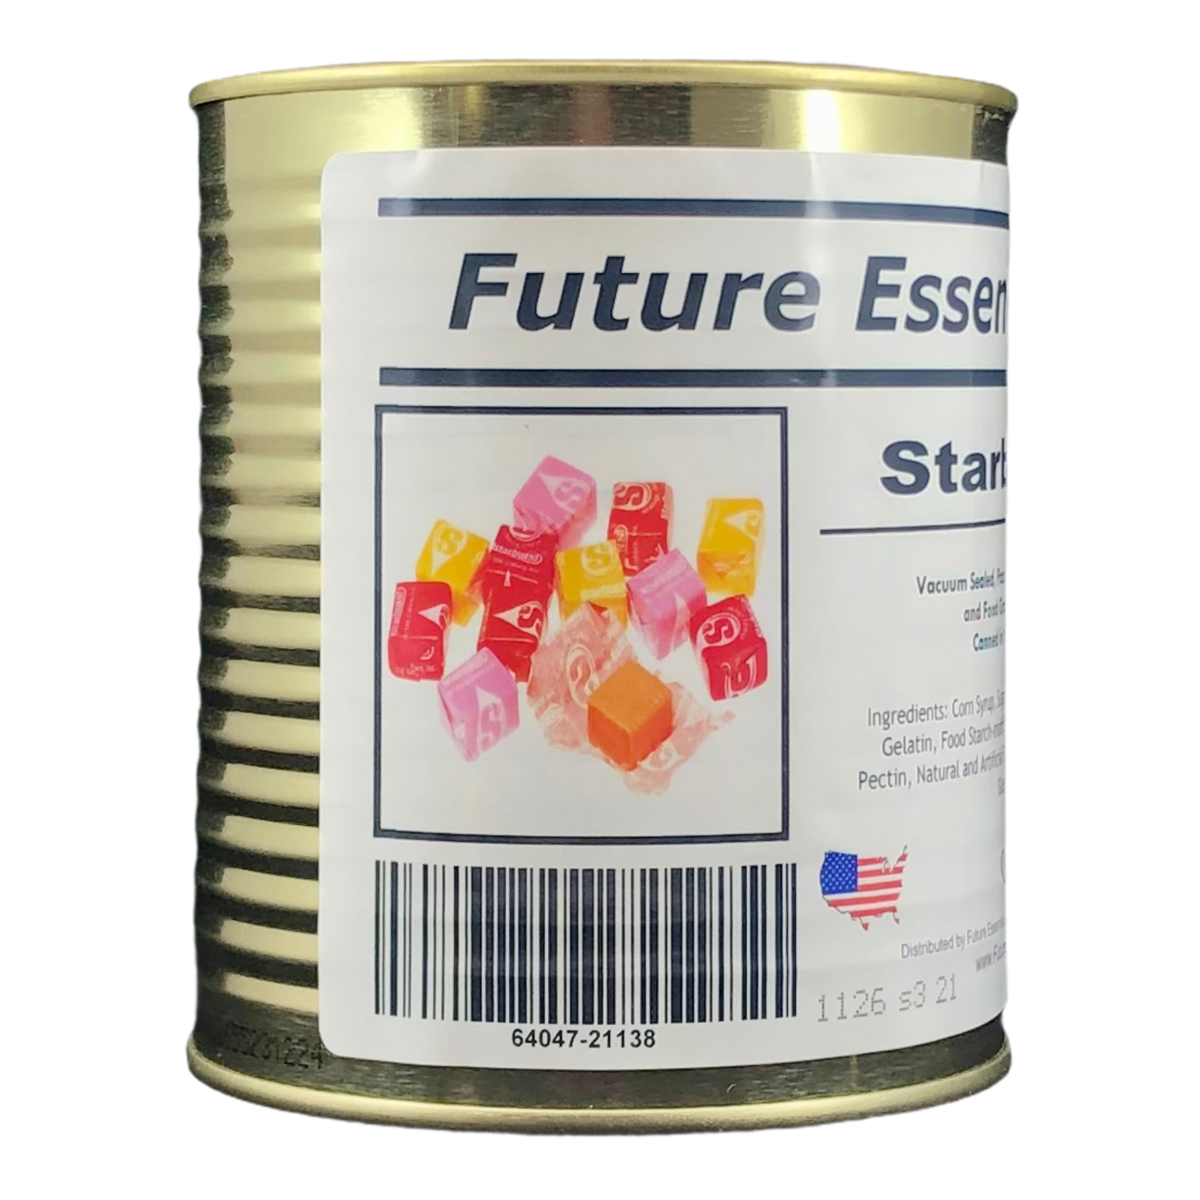 Future Essentials One Hundred (100) Starburst Fruit Chews